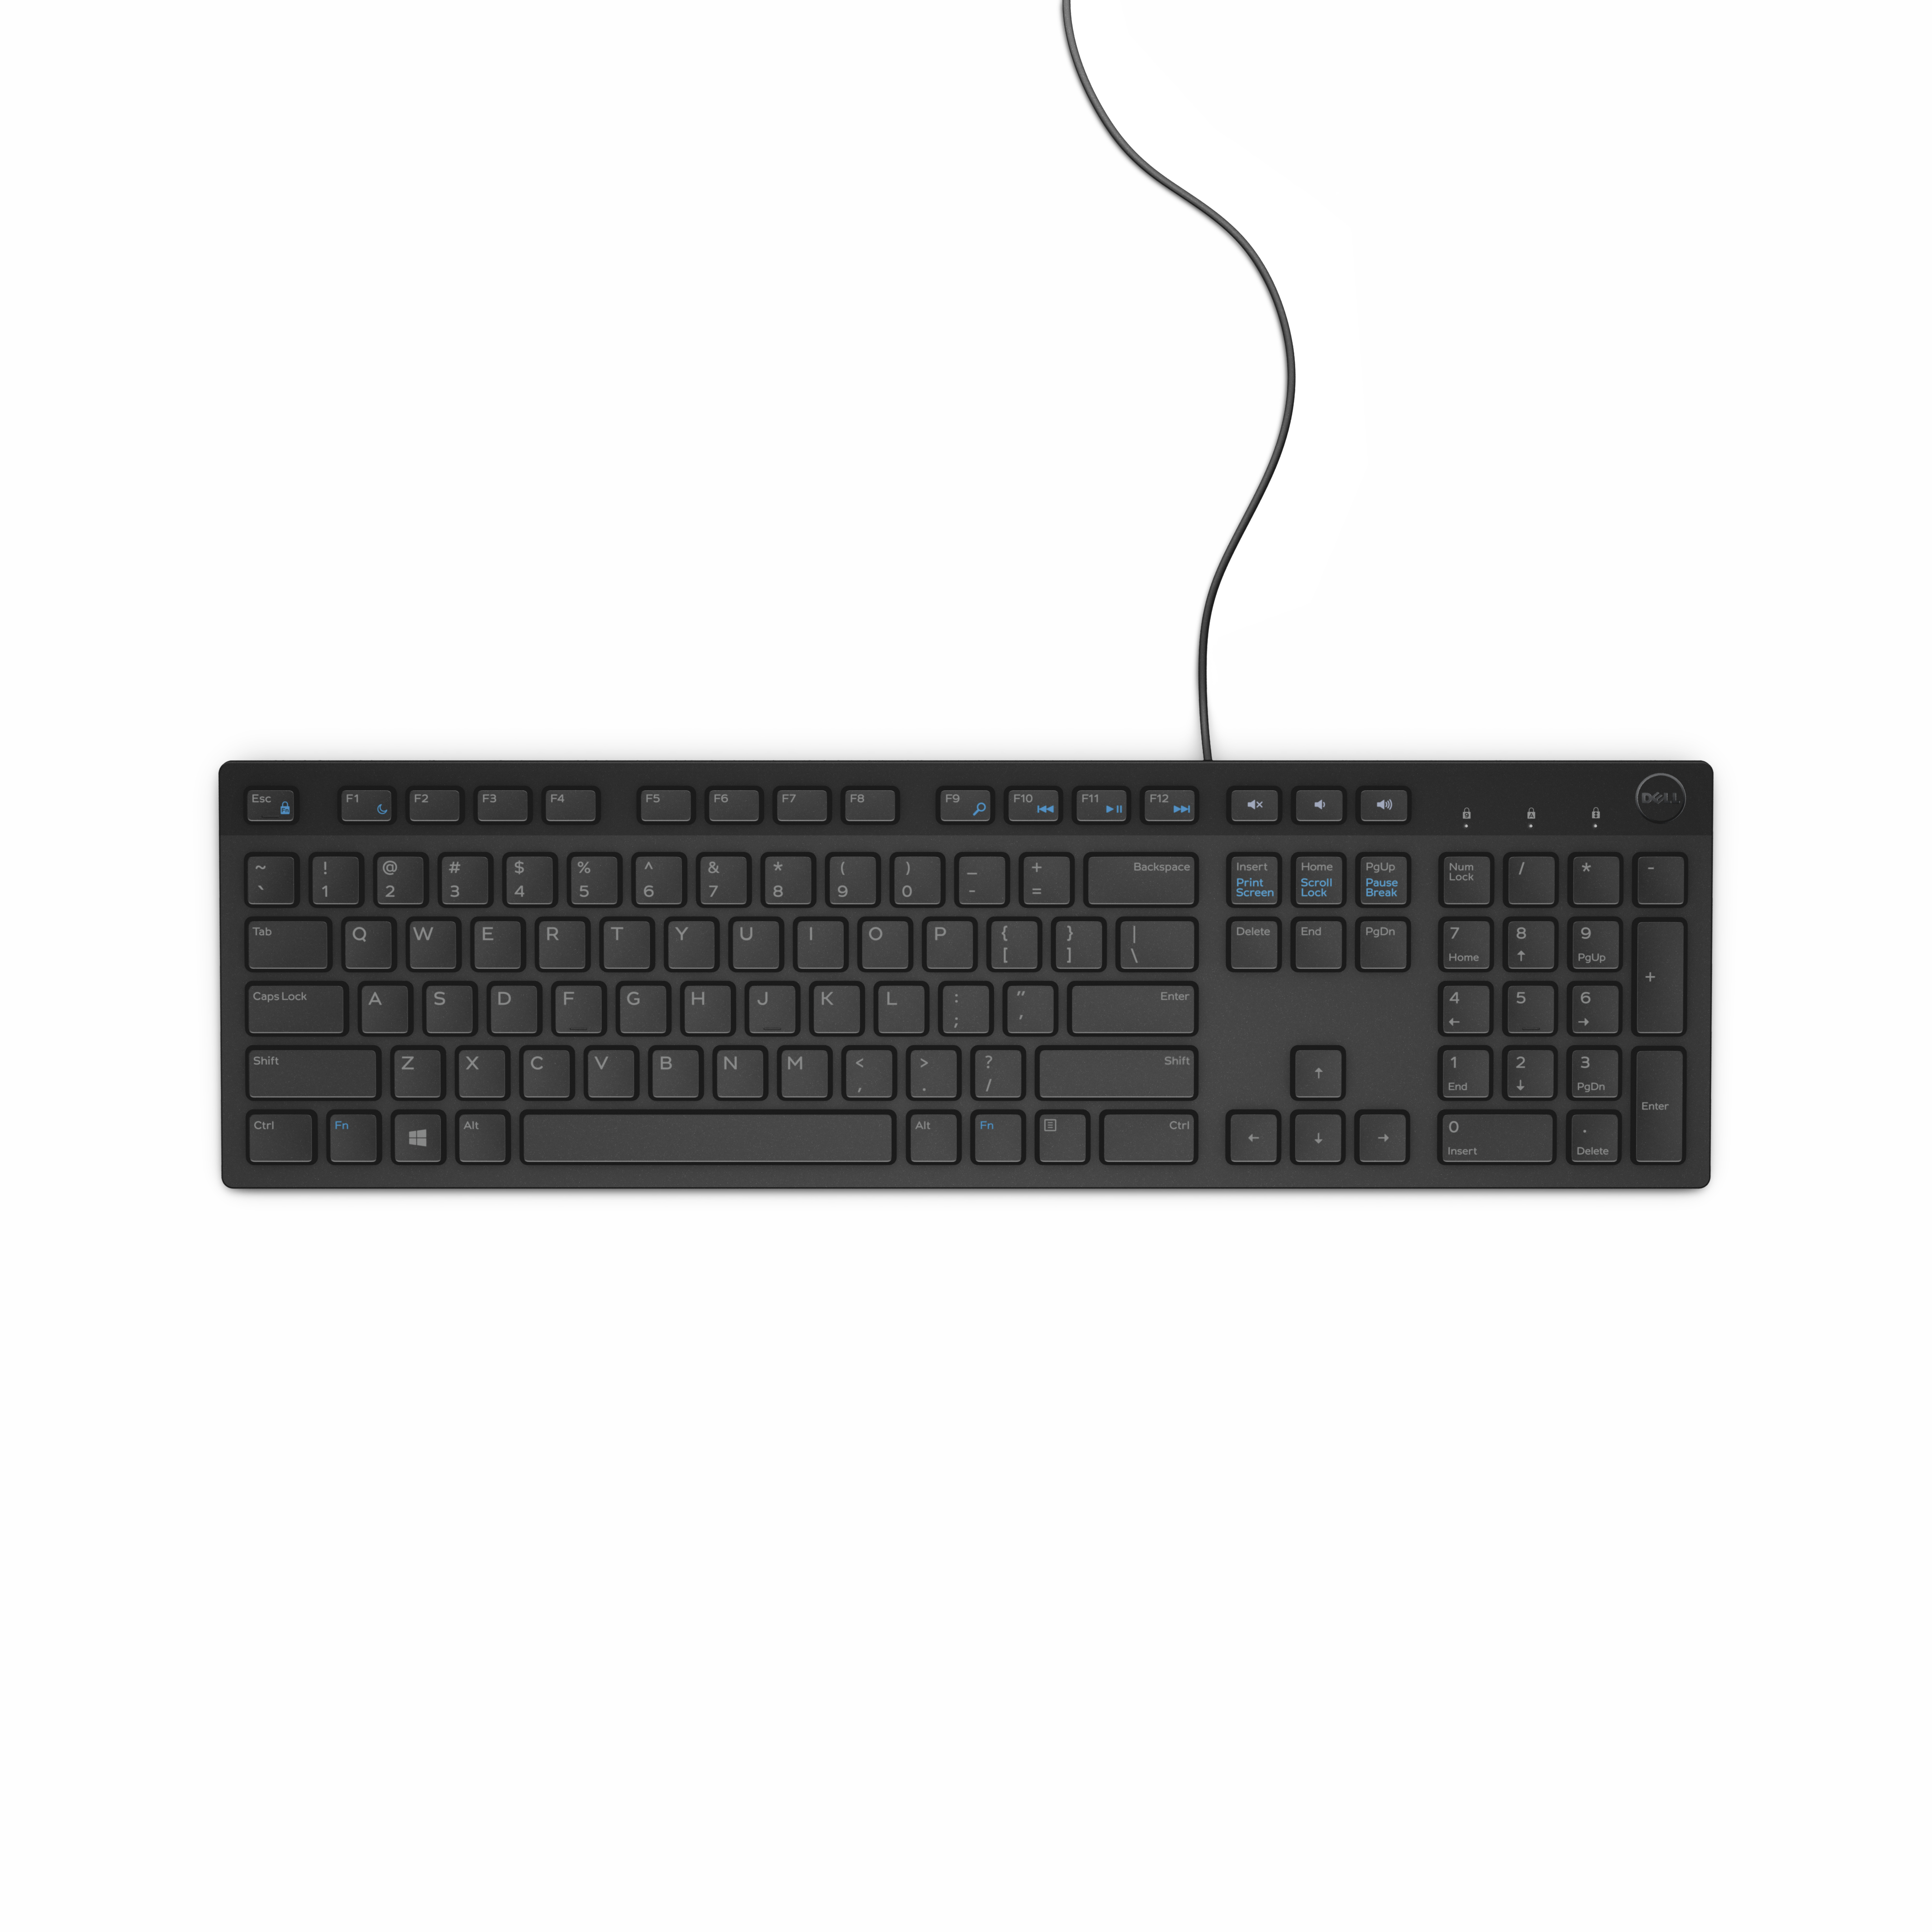 Dell KB216 - Tastatur - USB - QWERTZ - Deutsch